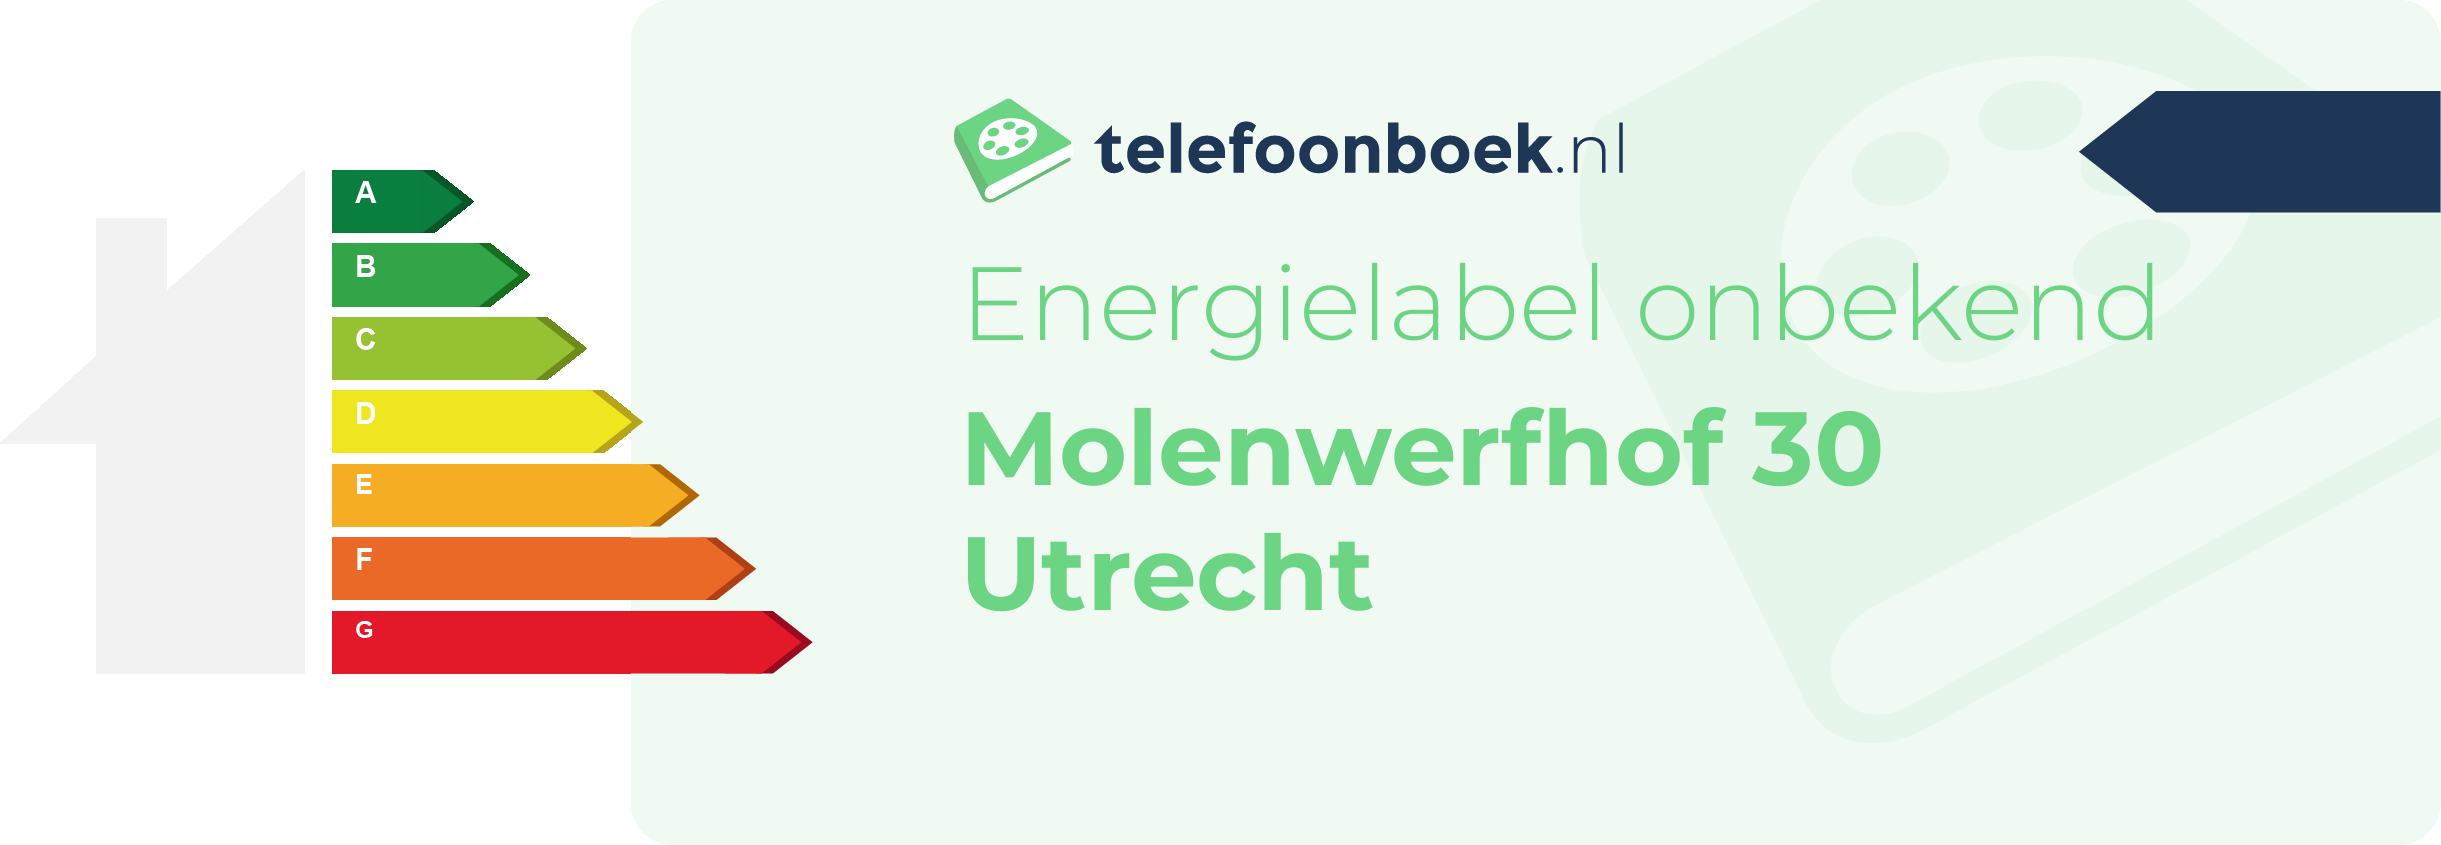 Energielabel Molenwerfhof 30 Utrecht